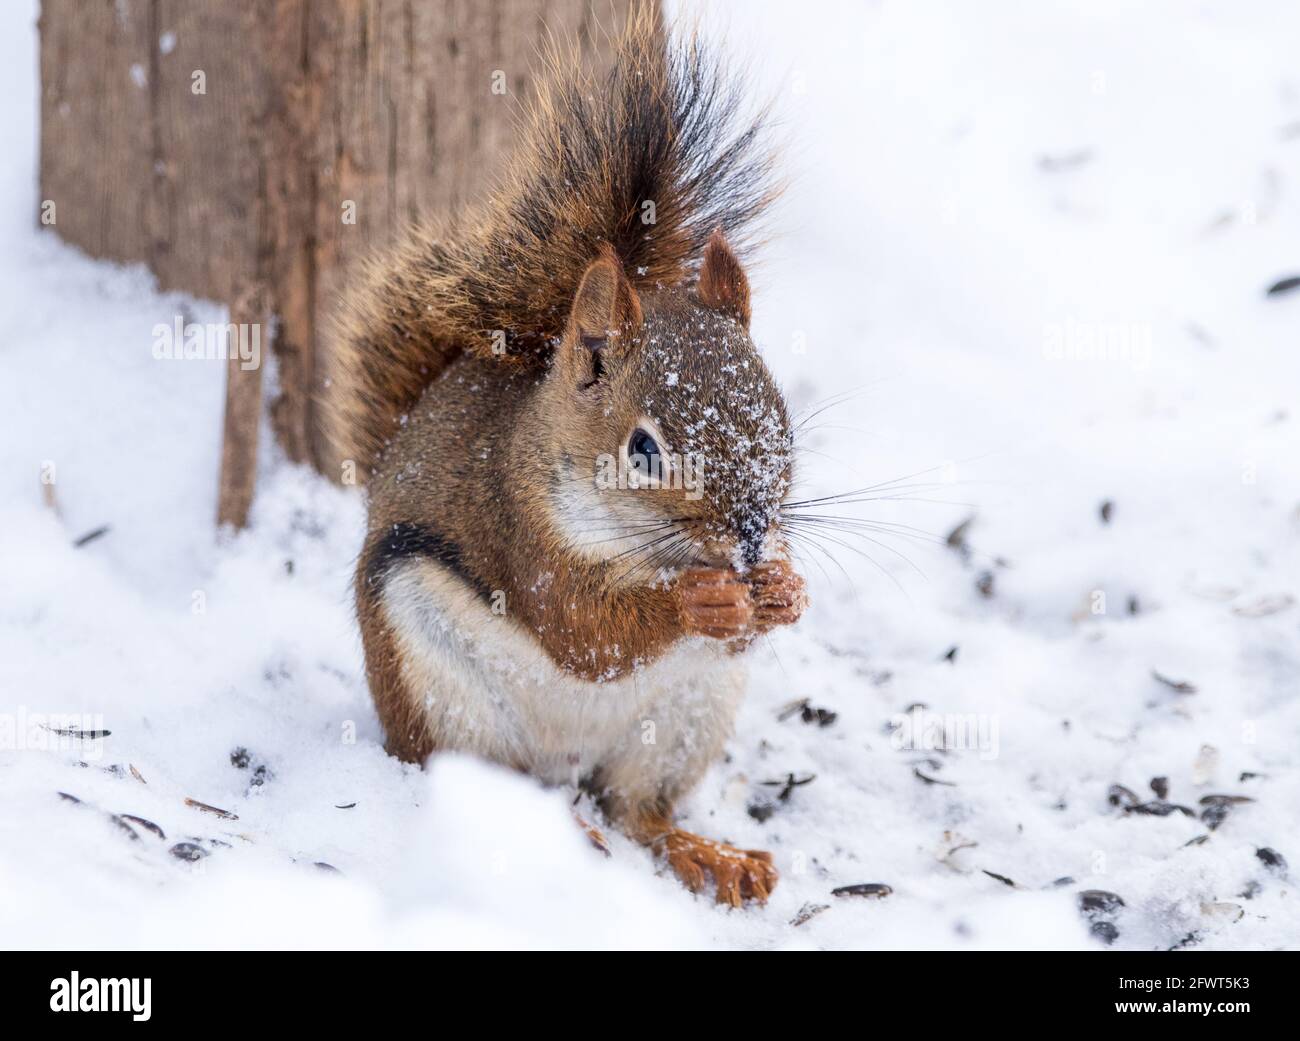 Cute red squirrel (Tamiasciurus hudsonicus) eating sunflower seeds in the snow Stock Photo